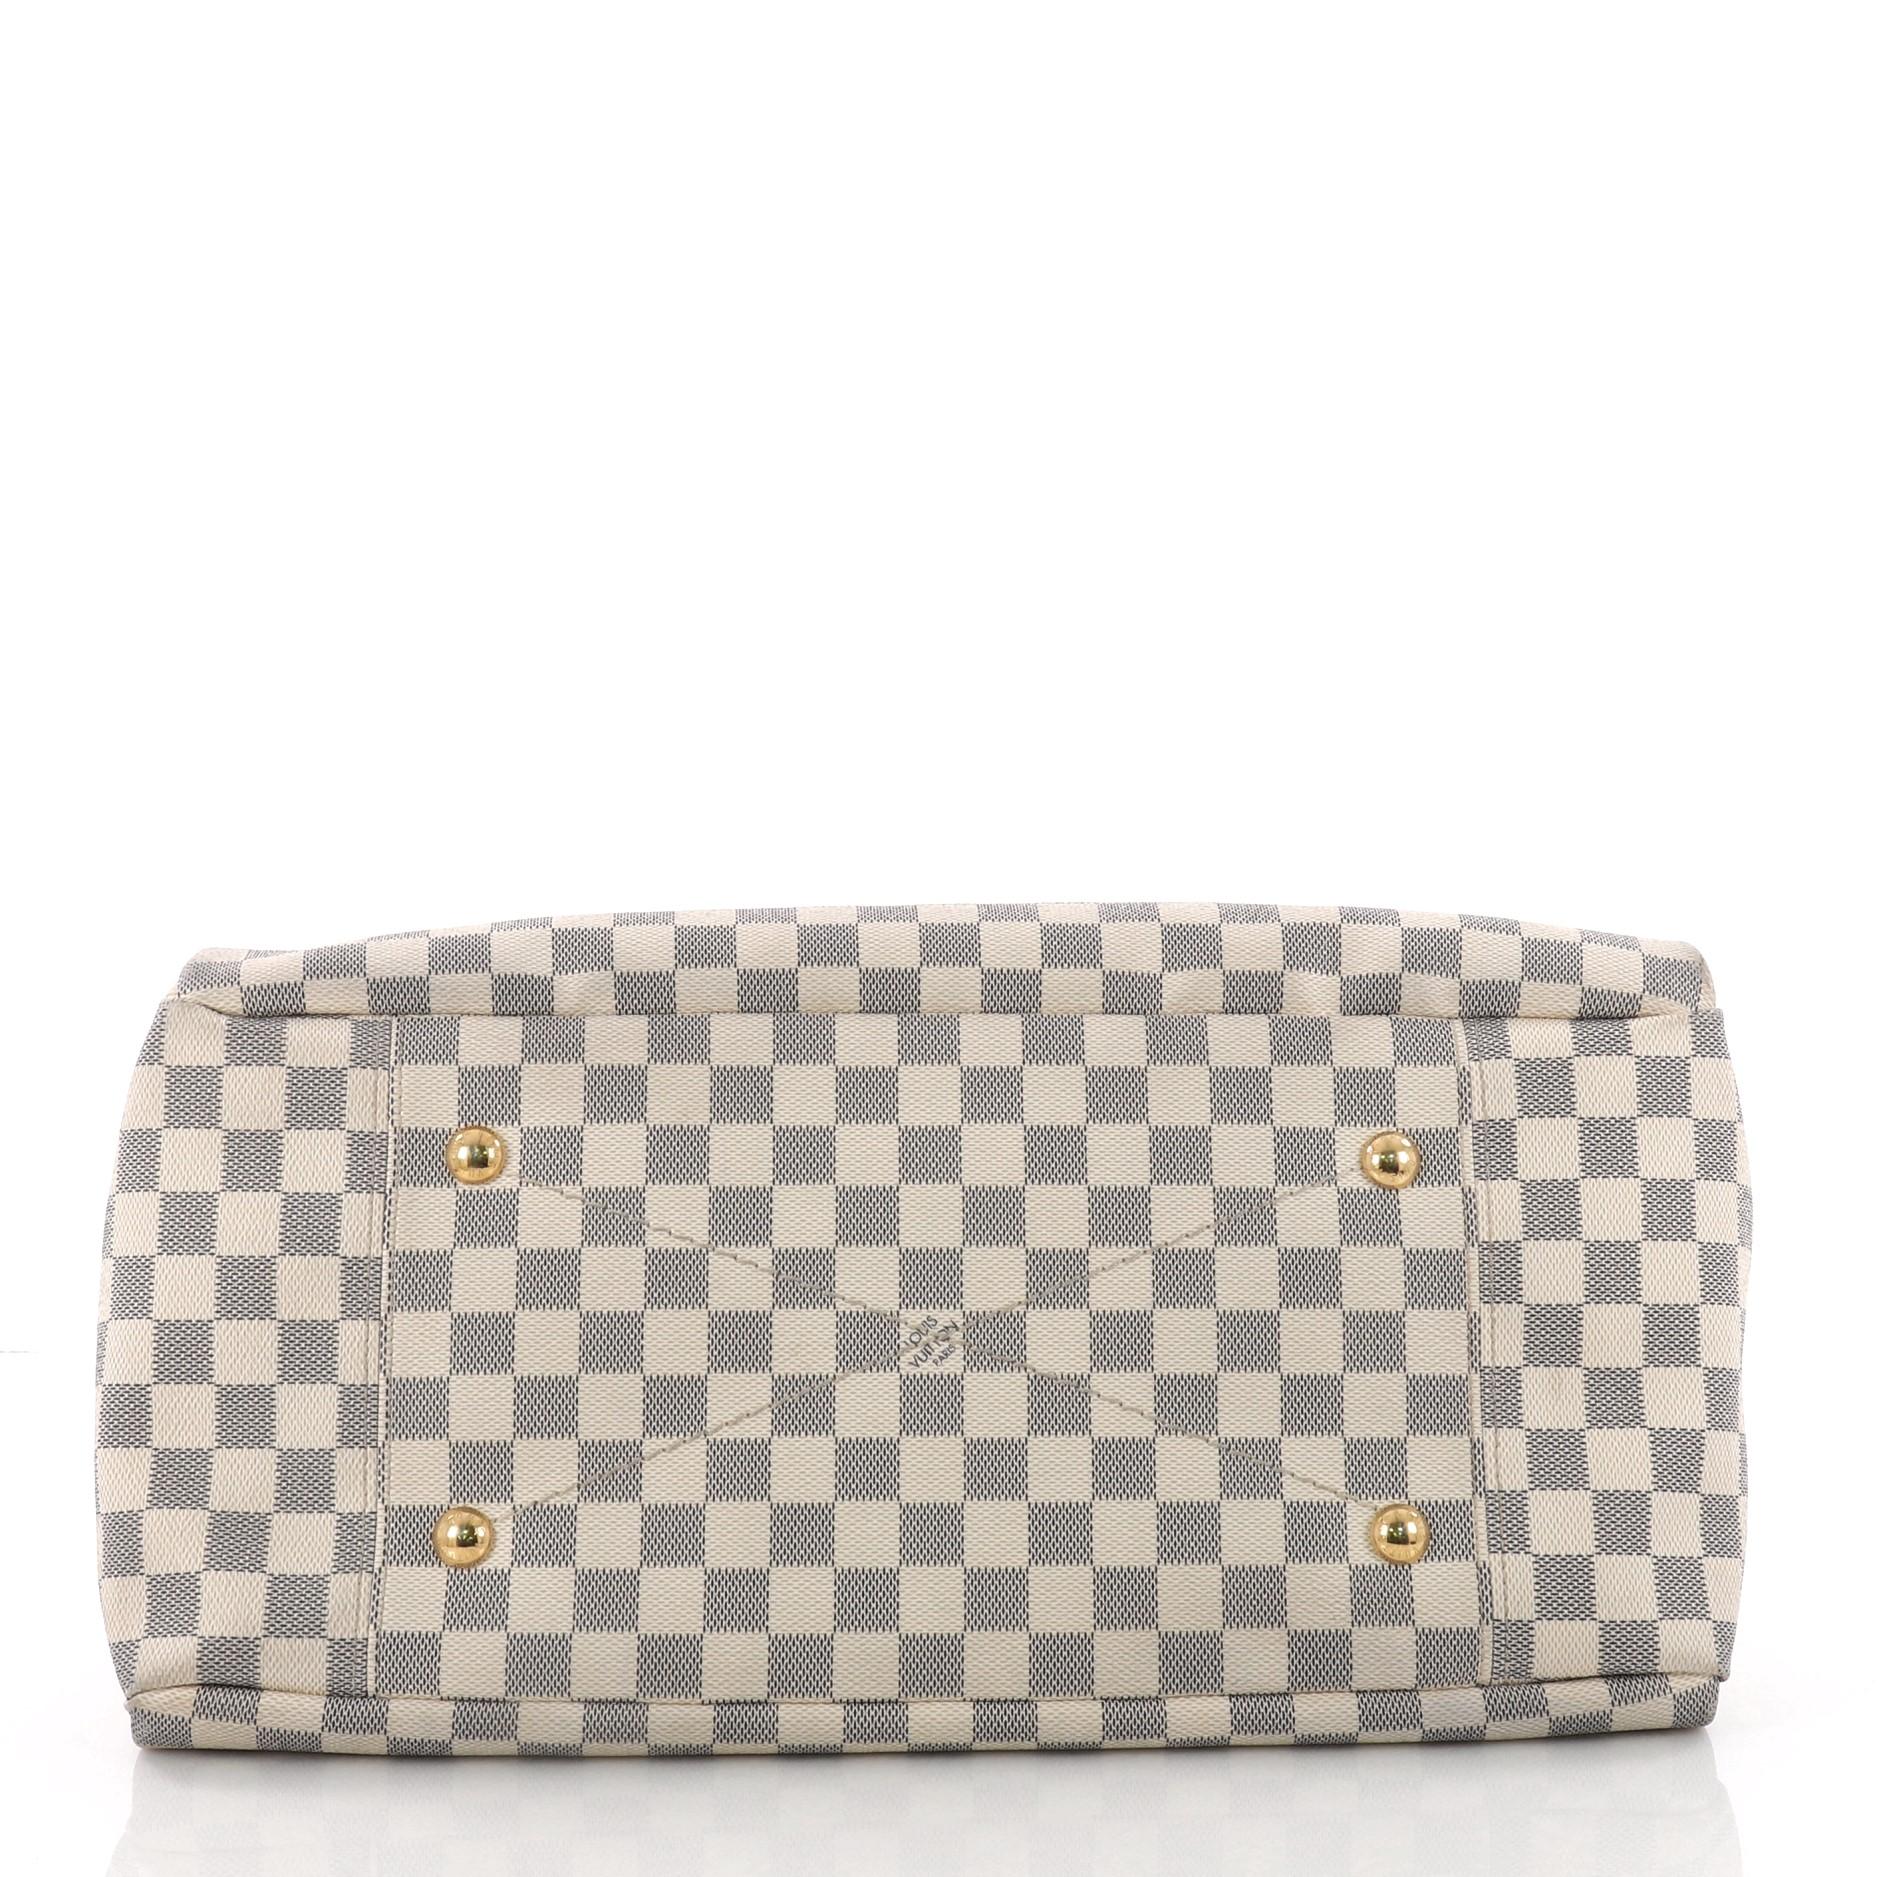 Women's or Men's Louis Vuitton Artsy Handbag Damier MM 